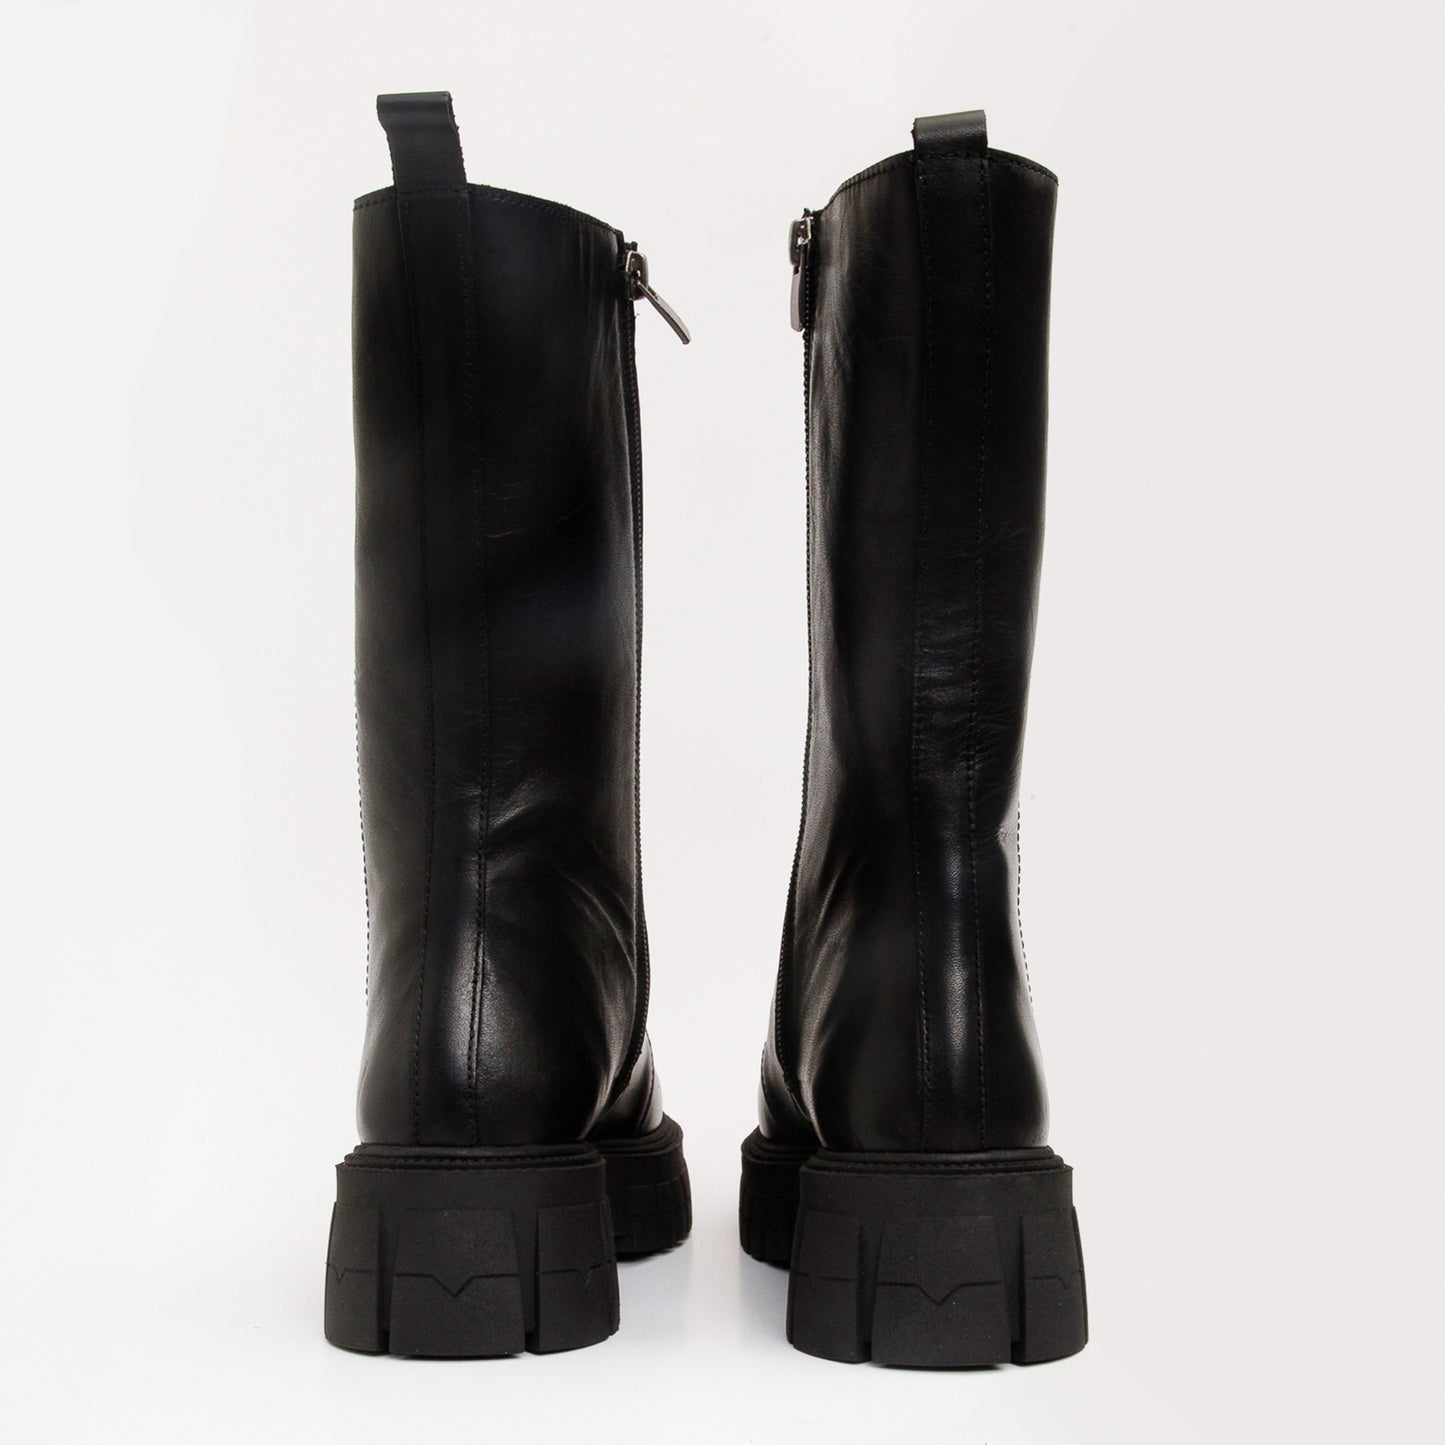 The Mardin Black Leather Women Boot